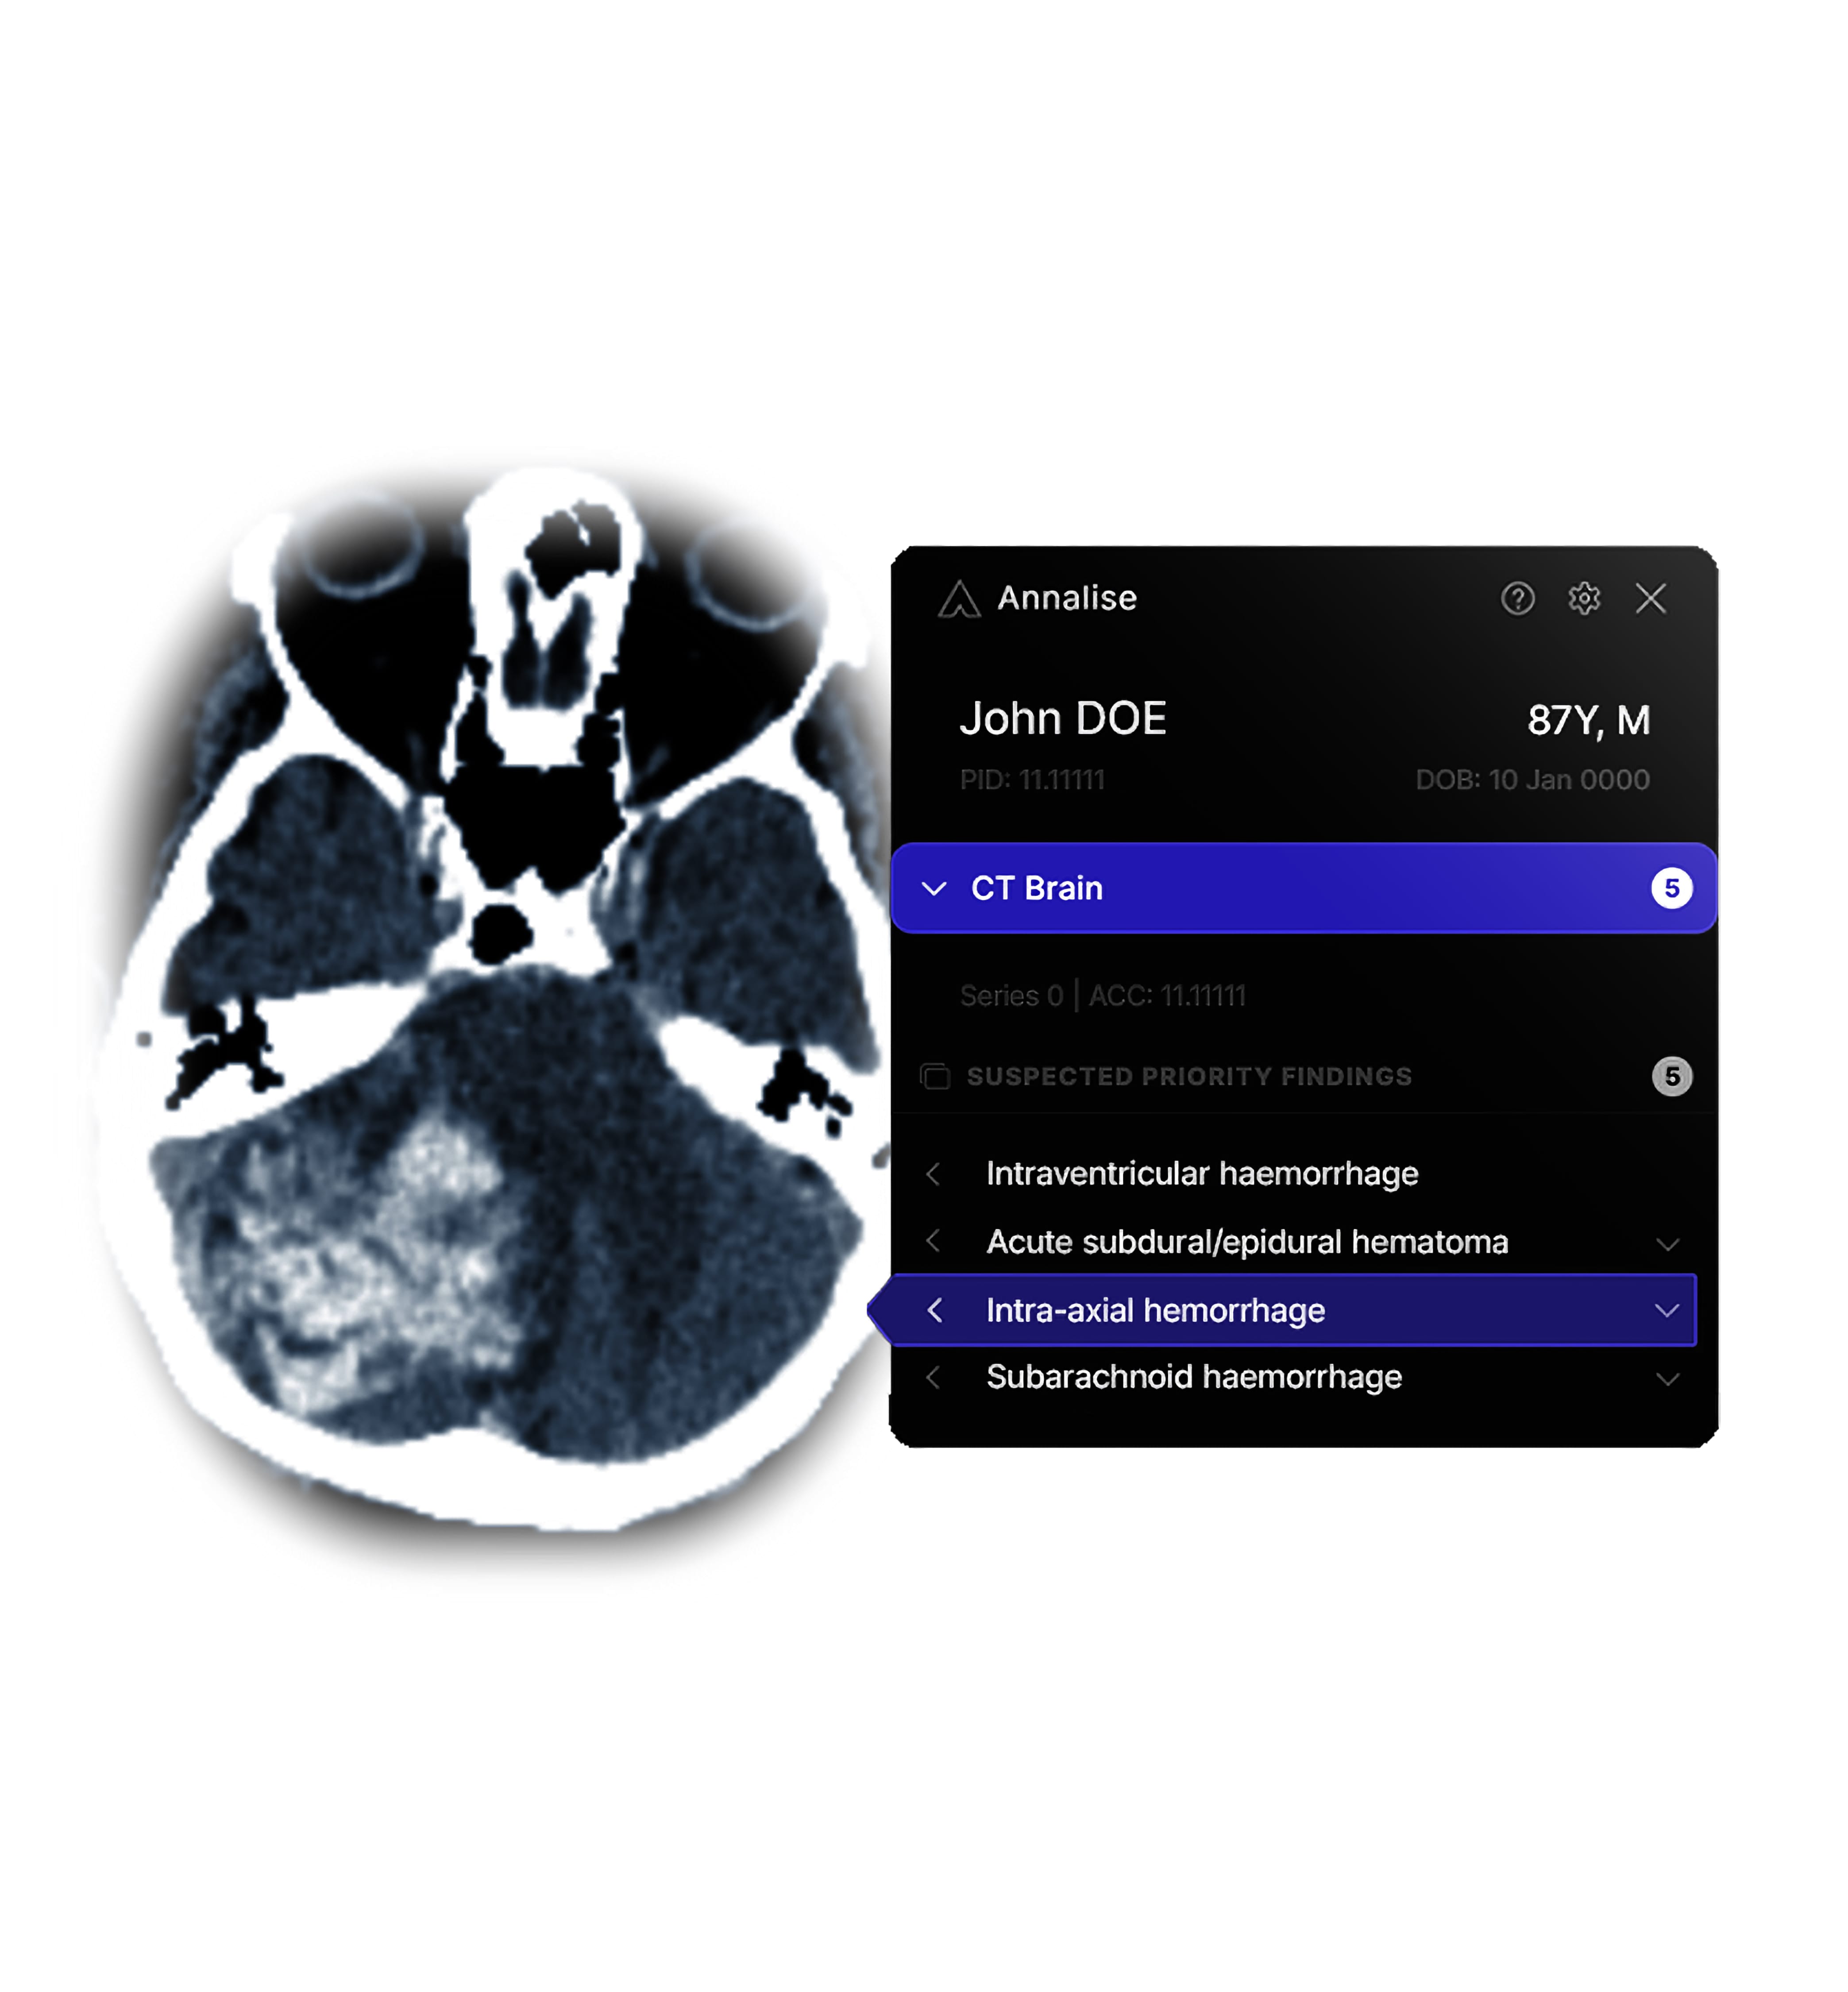 Annalise Enterprise: AI Assistant for Medical Imaging - Good Design